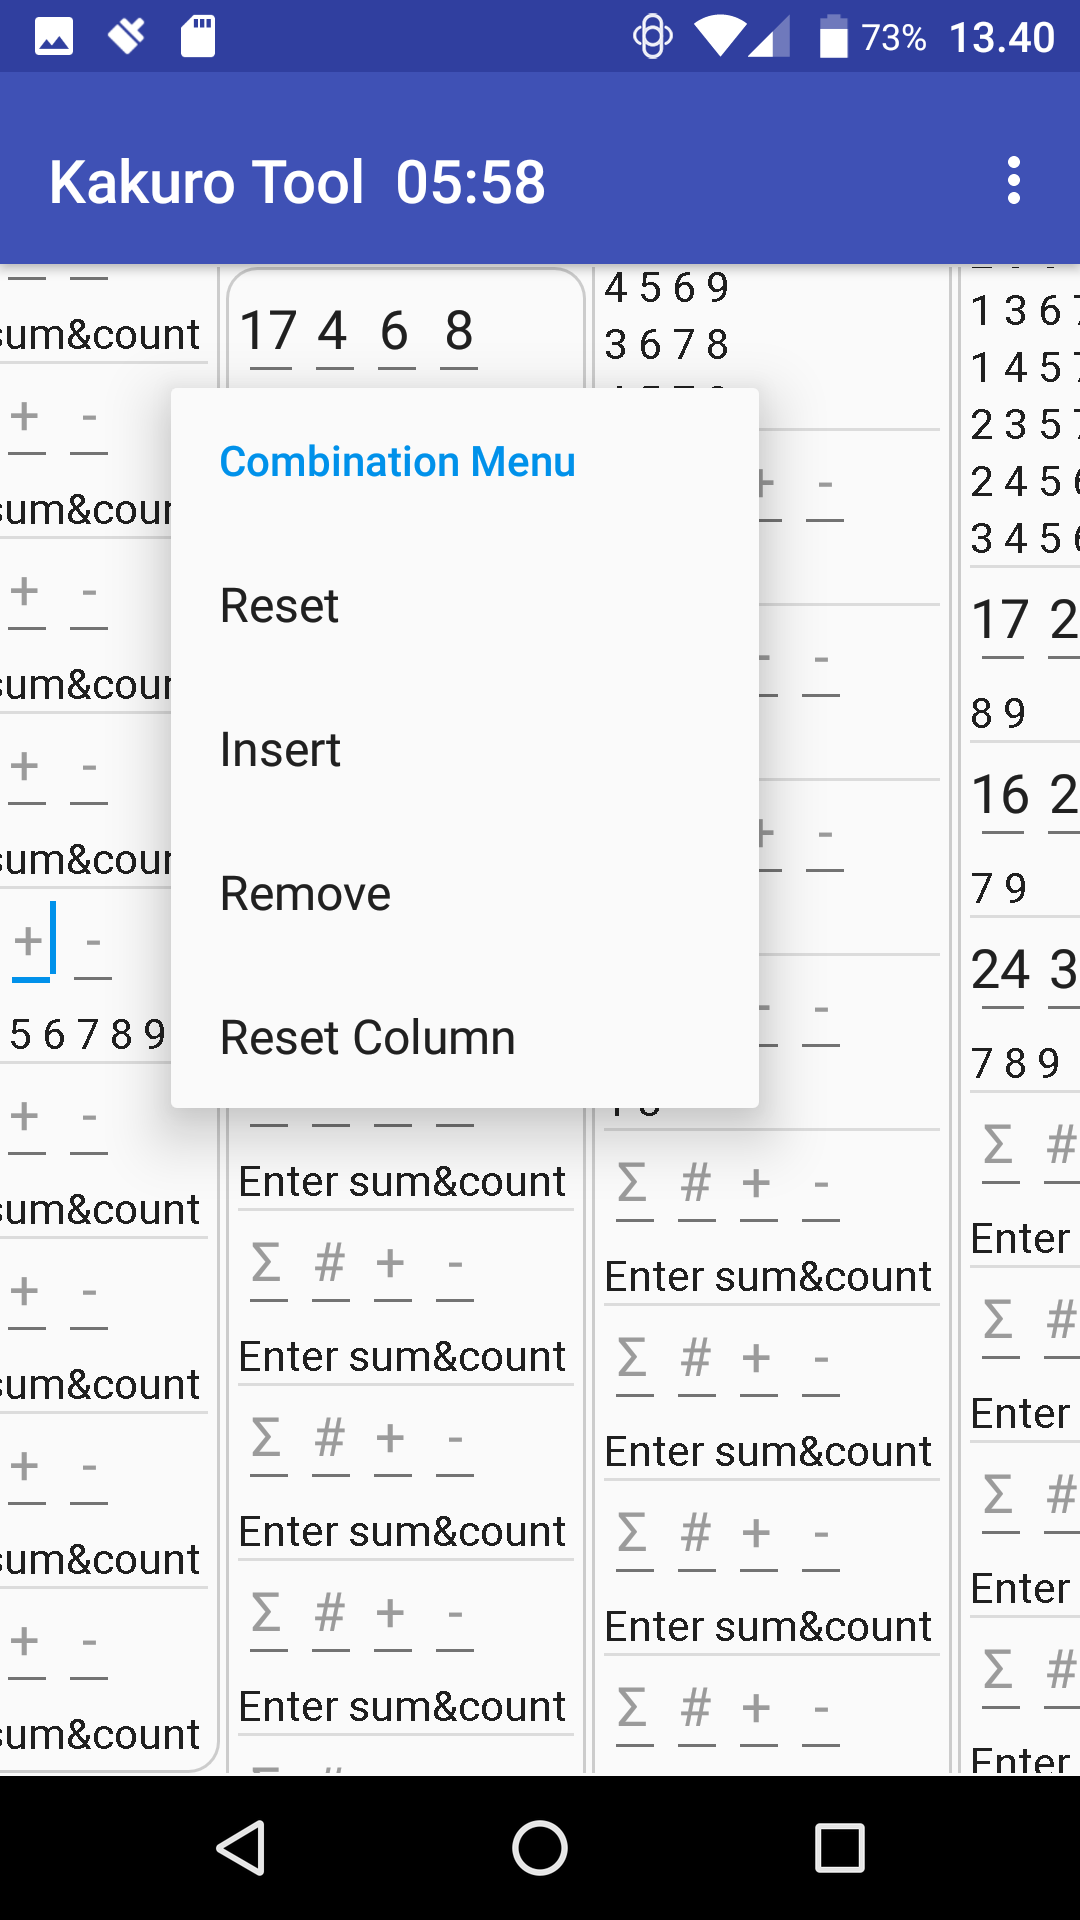 screenshots/Context-menu-Element-small.png: Not found